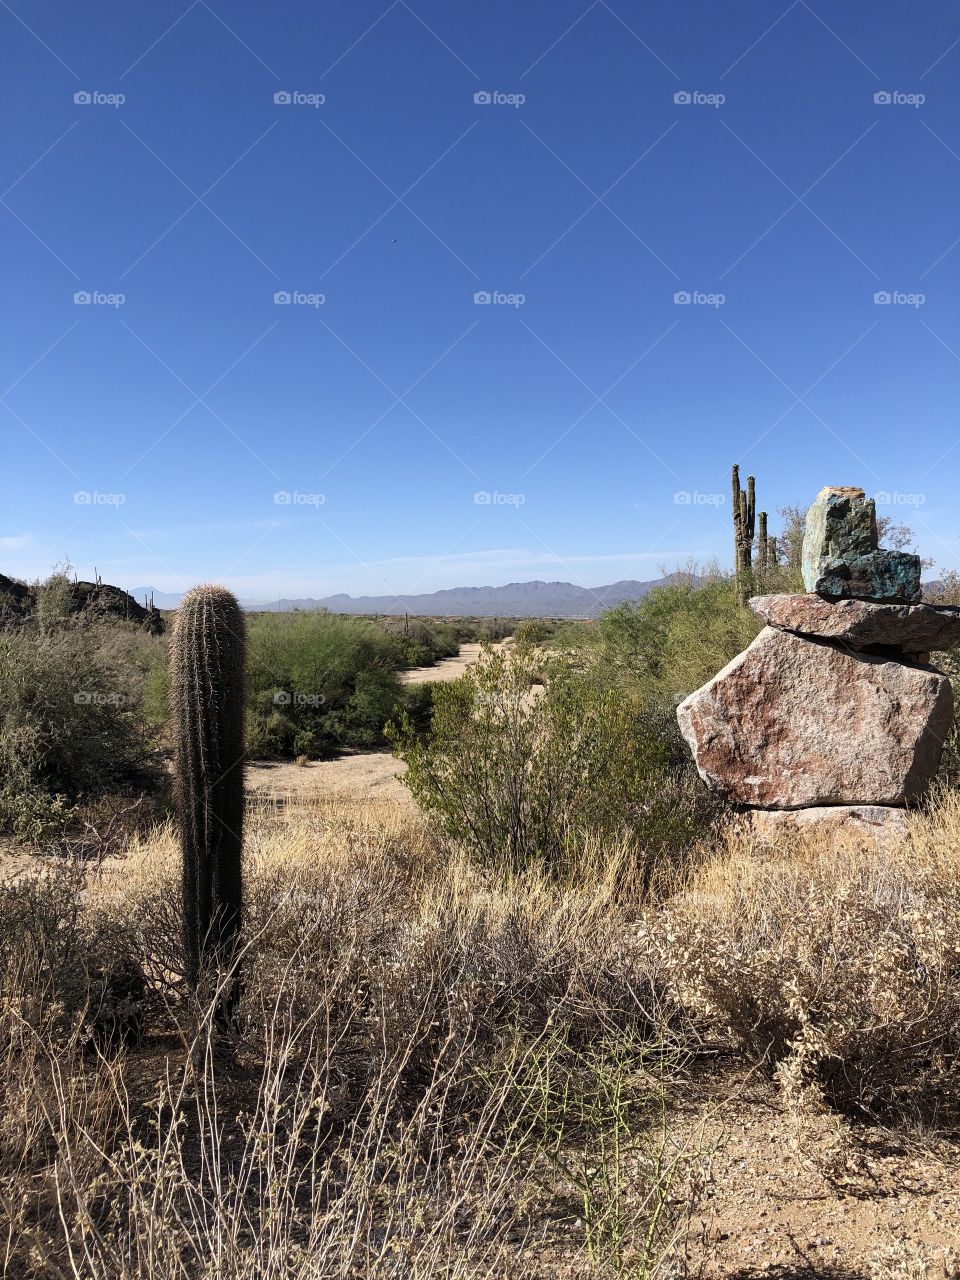 A scenic desert landscape taken in Tucson, Arizona. 